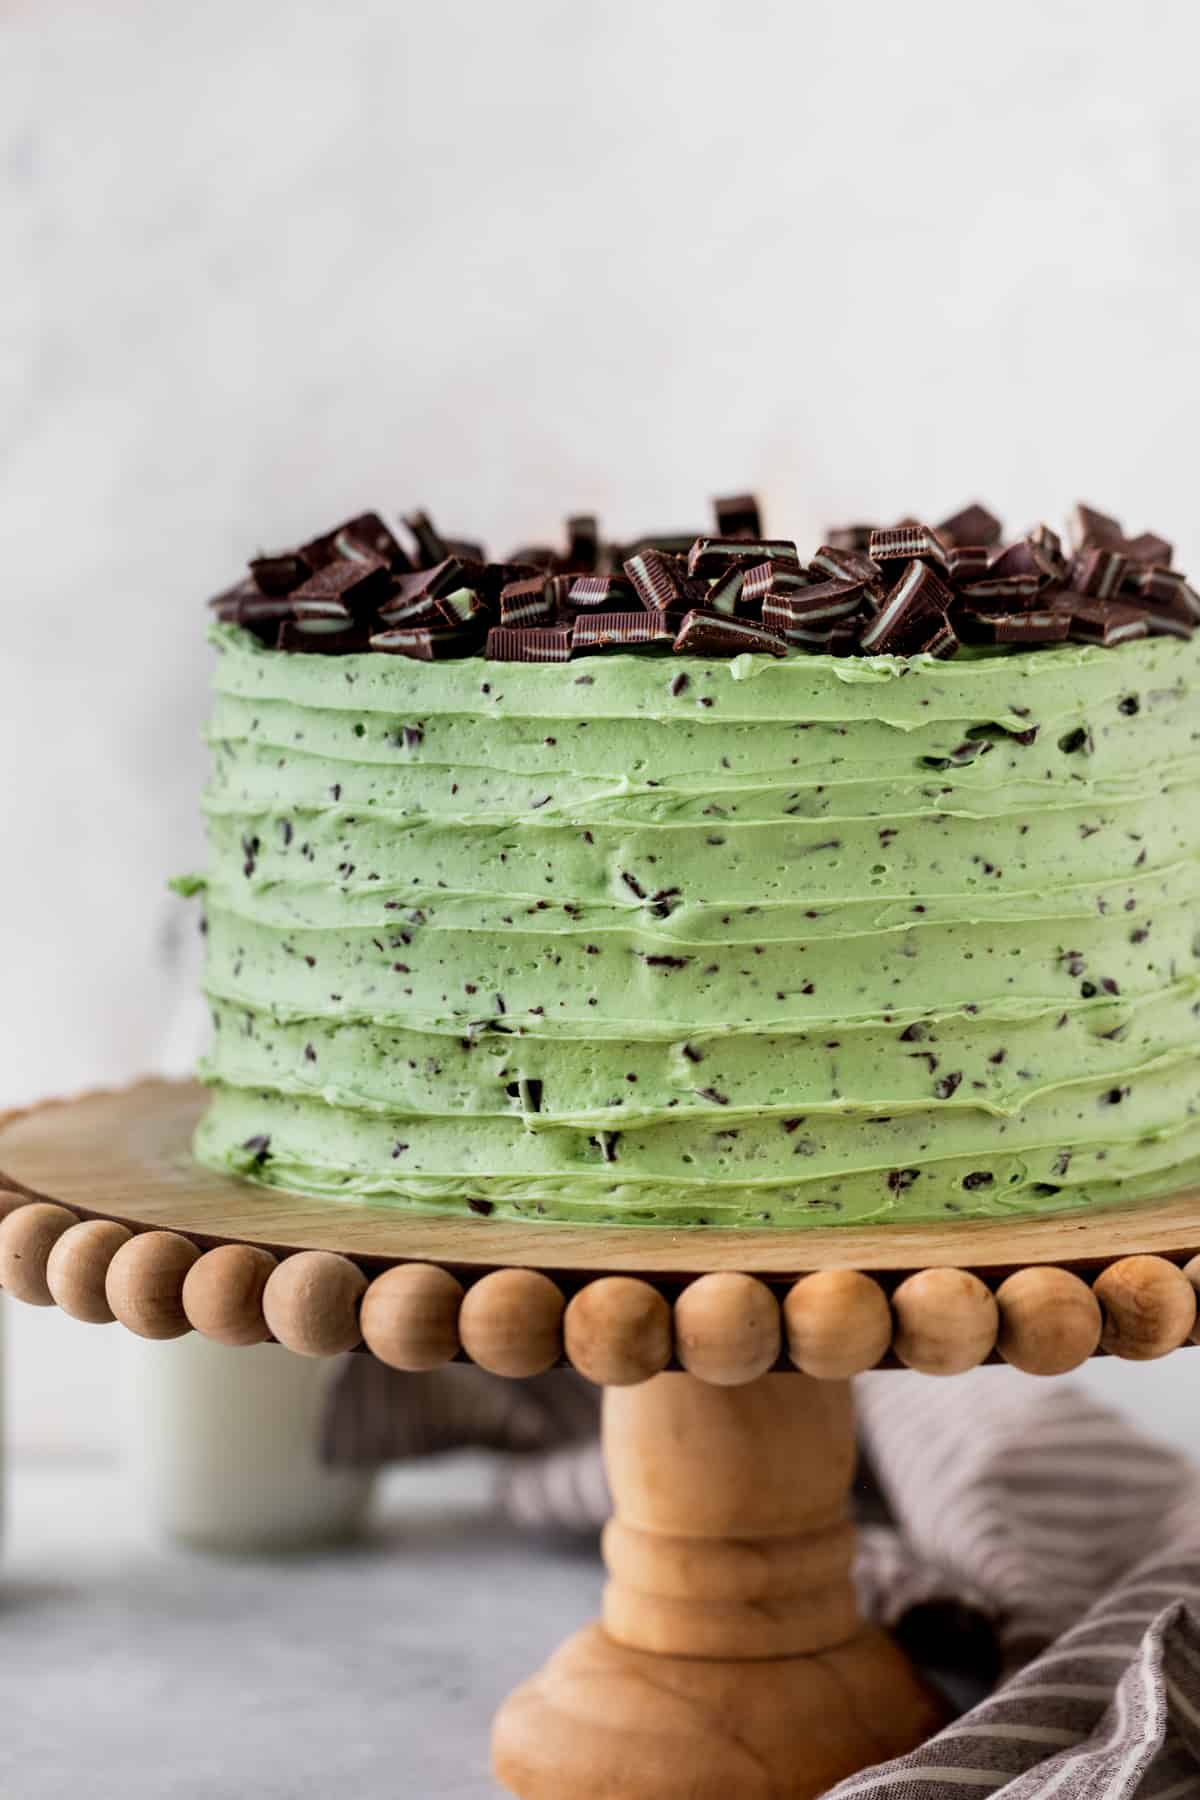 Chocolate mint cake on a cake stand.